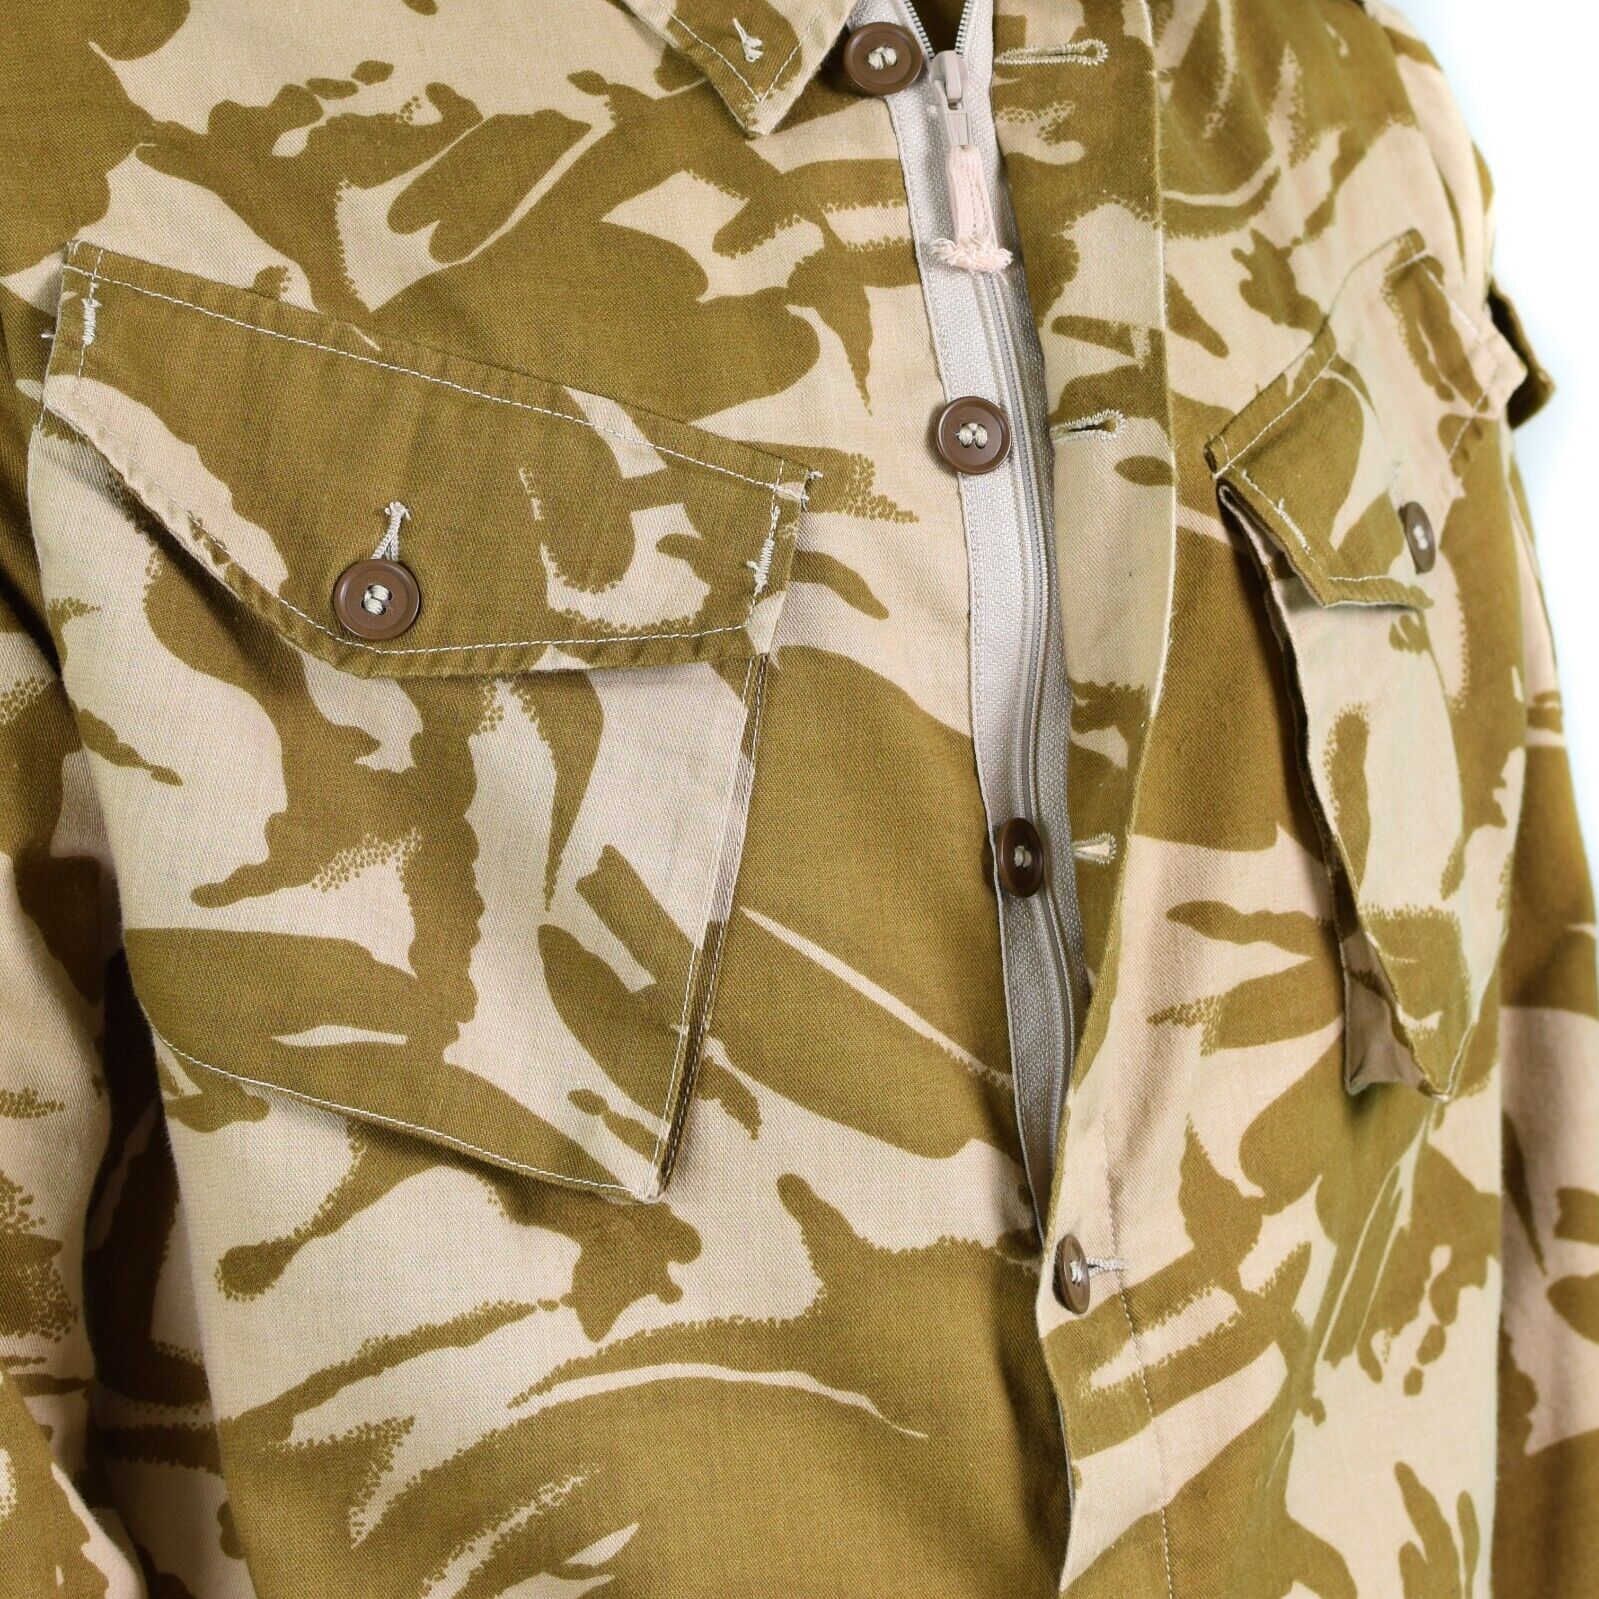 Genuine British army jacket combat desert camo field shirt lightweight  military | eBay